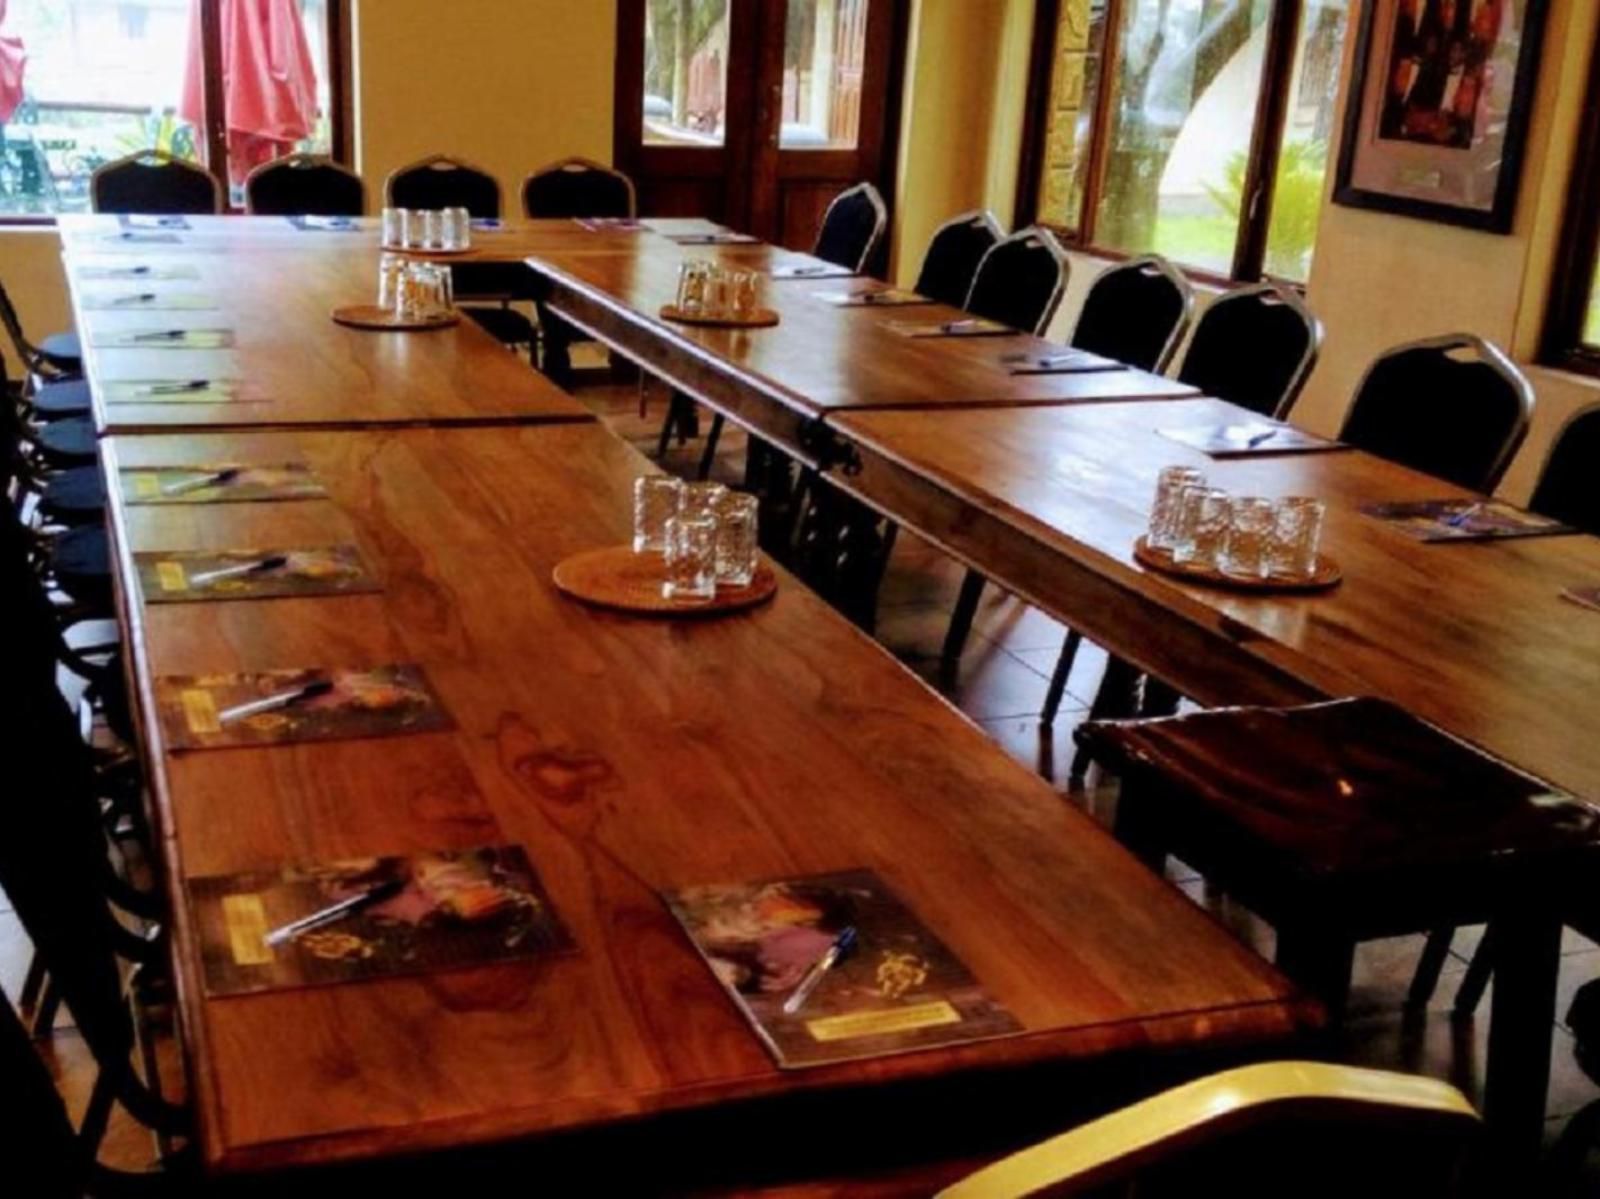 Das Landhaus Guest Lodge Dainfern Johannesburg Gauteng South Africa Place Cover, Food, Seminar Room